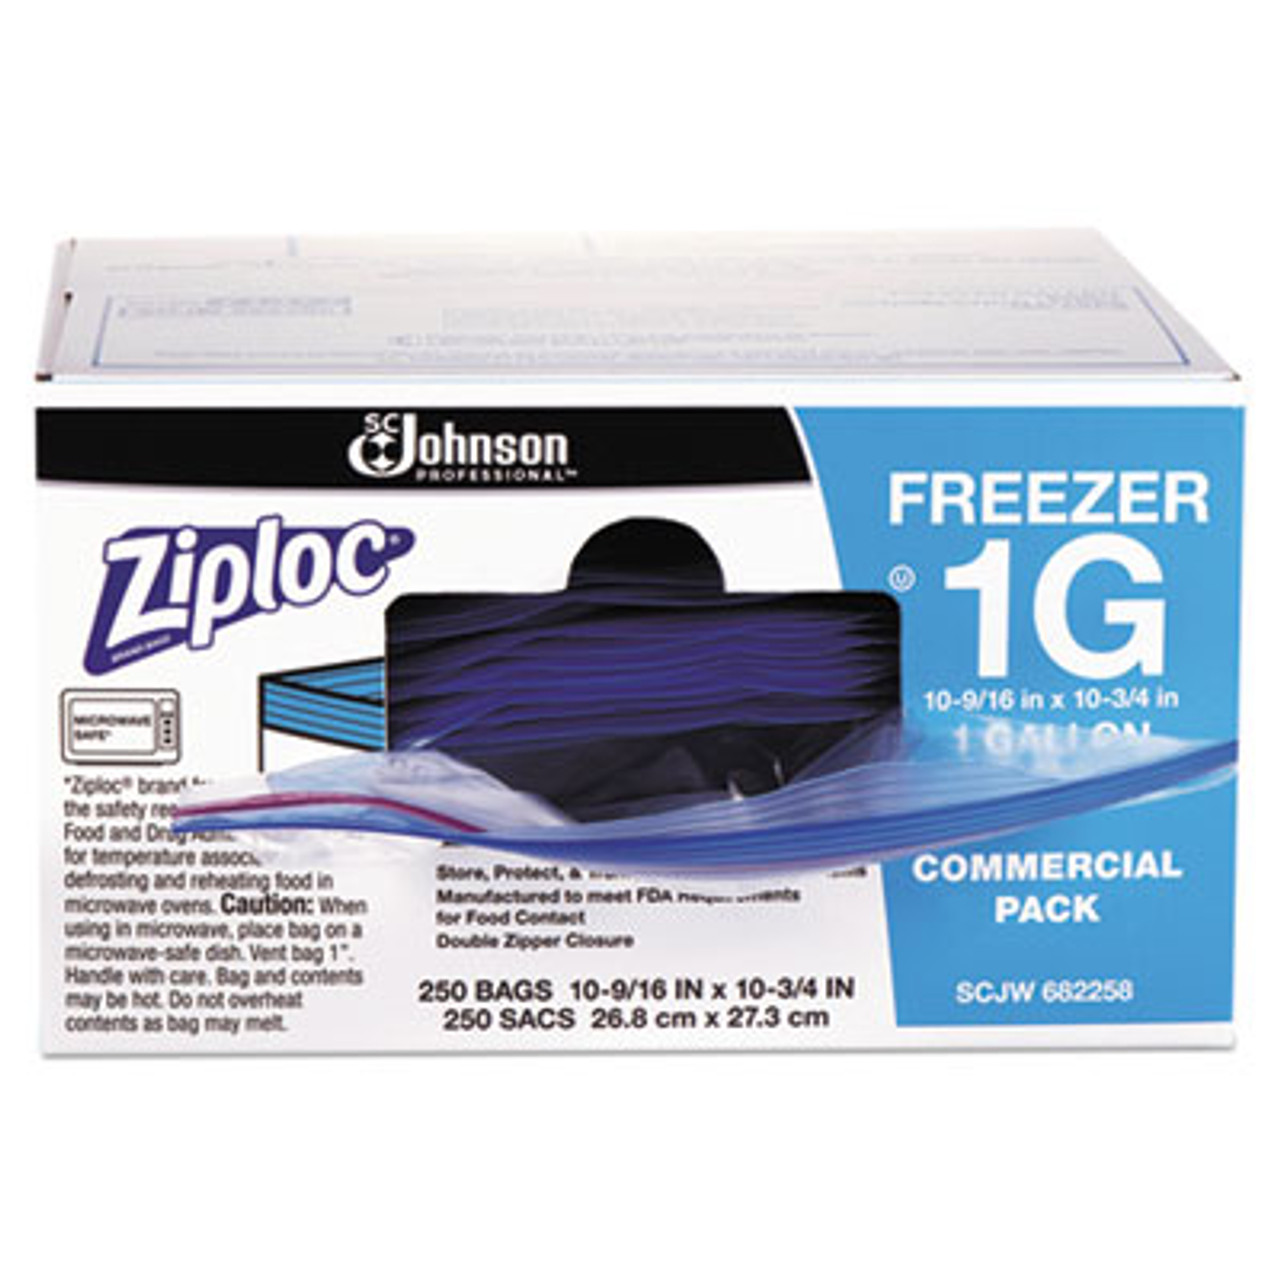 Ziploc Double Zipper Freezer Storage Bags, 2 Gallon, 100 Bags/Carton  (682254)